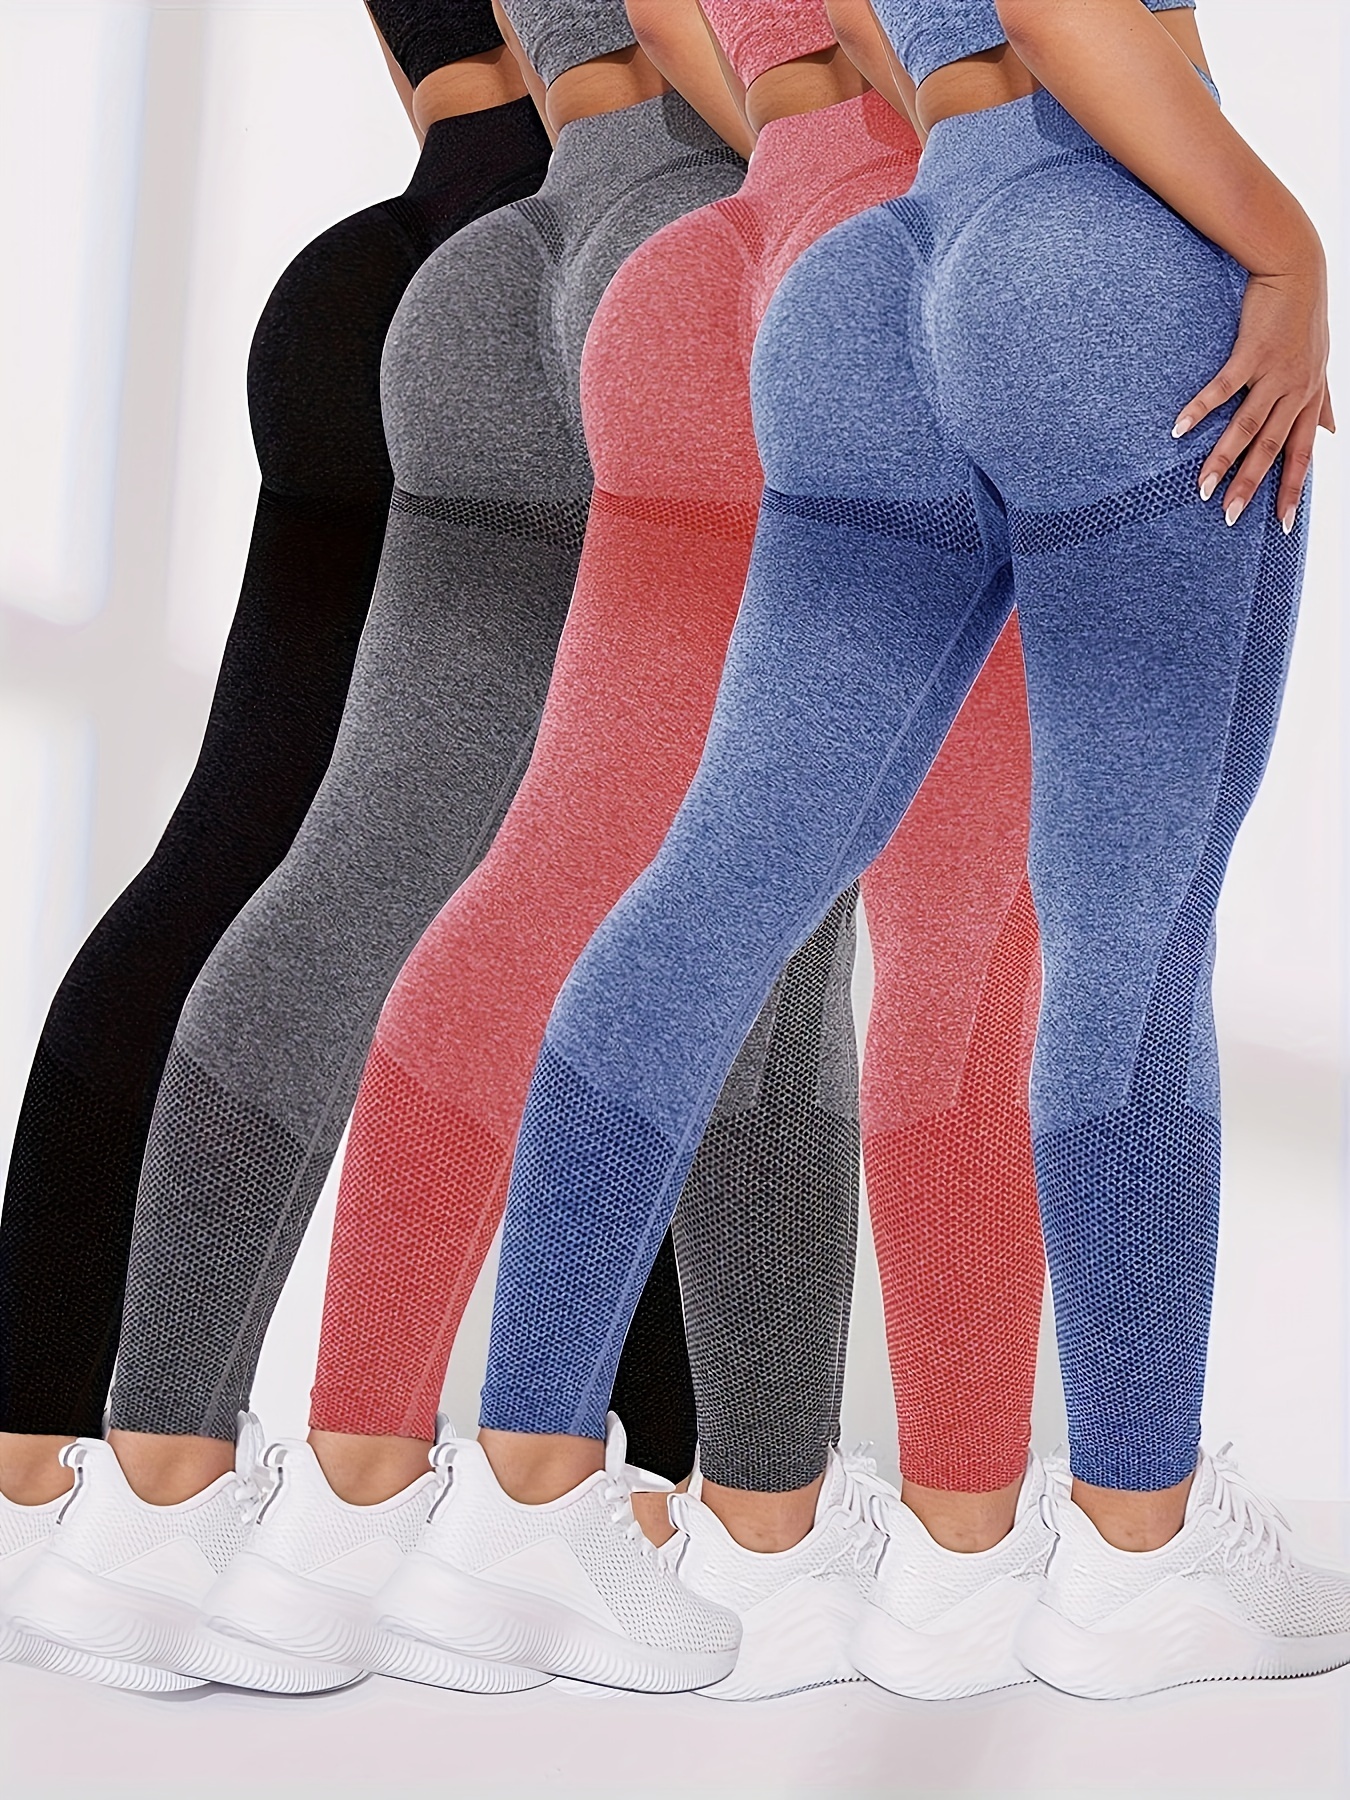 Women's Yoga Pants High Waist Leggings Hip Lift Fitness Pants